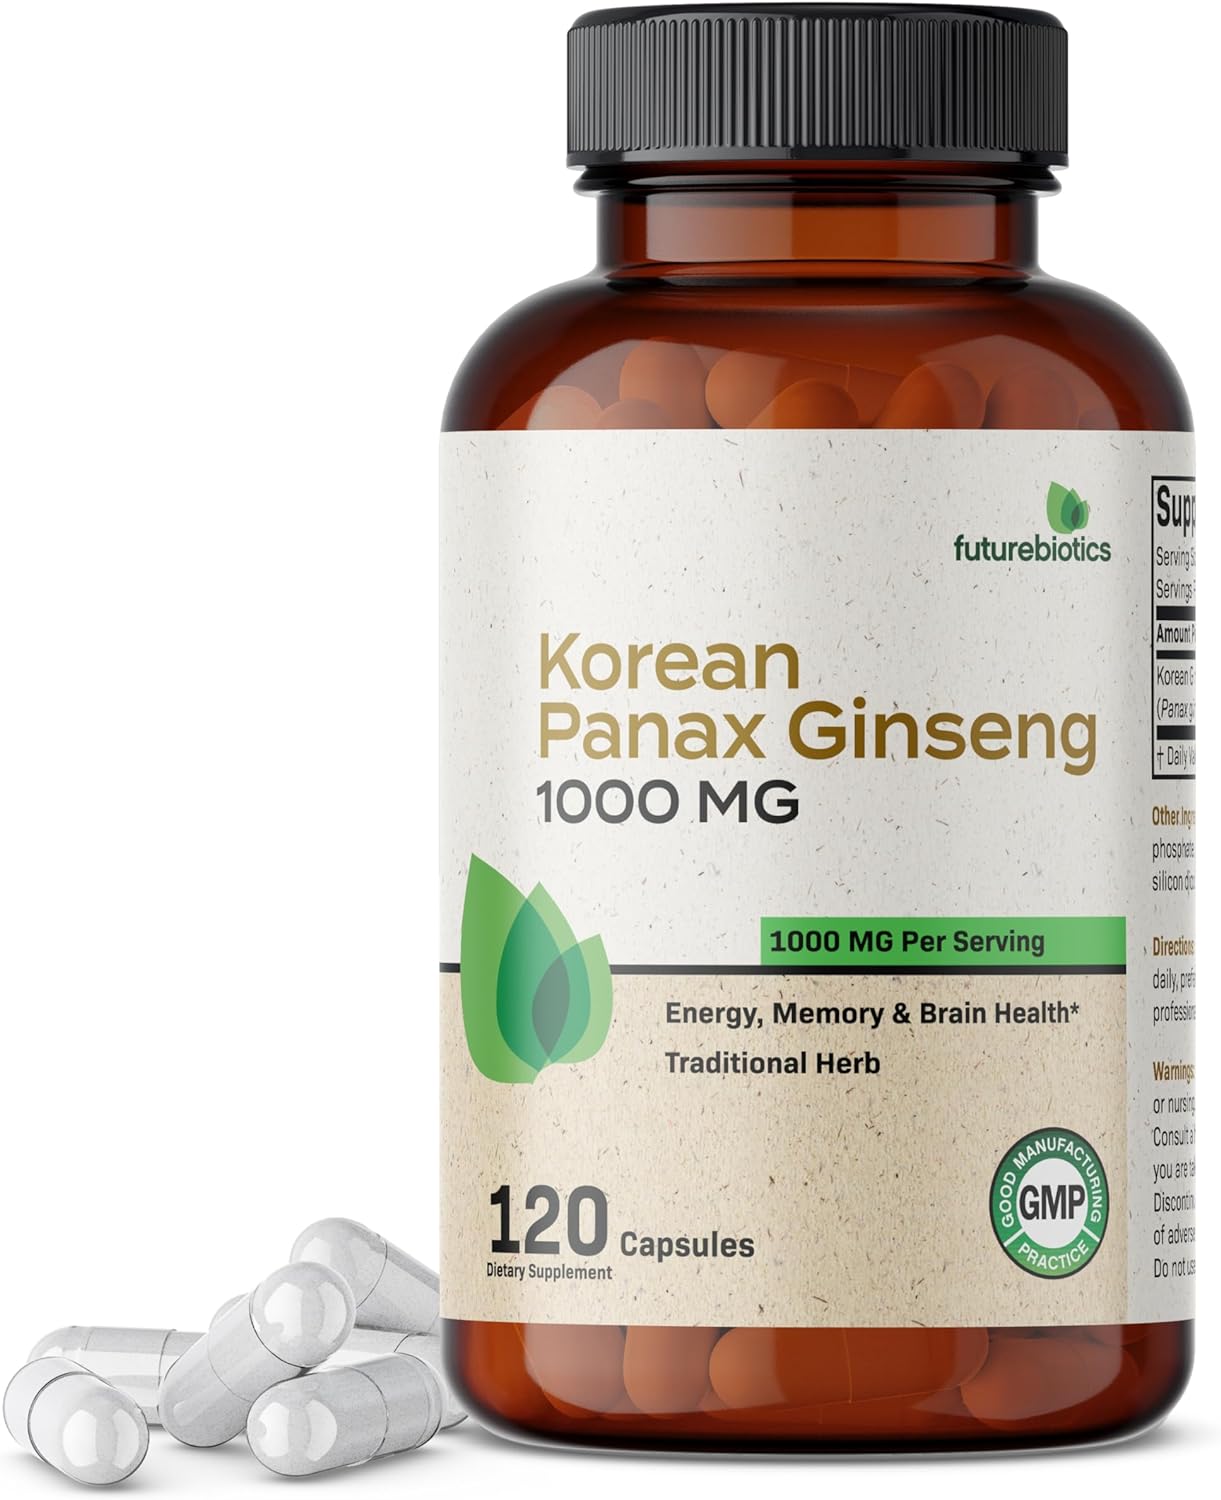 Futurebiotics Korean Panax Ginseng 1000 MG Per Serving 